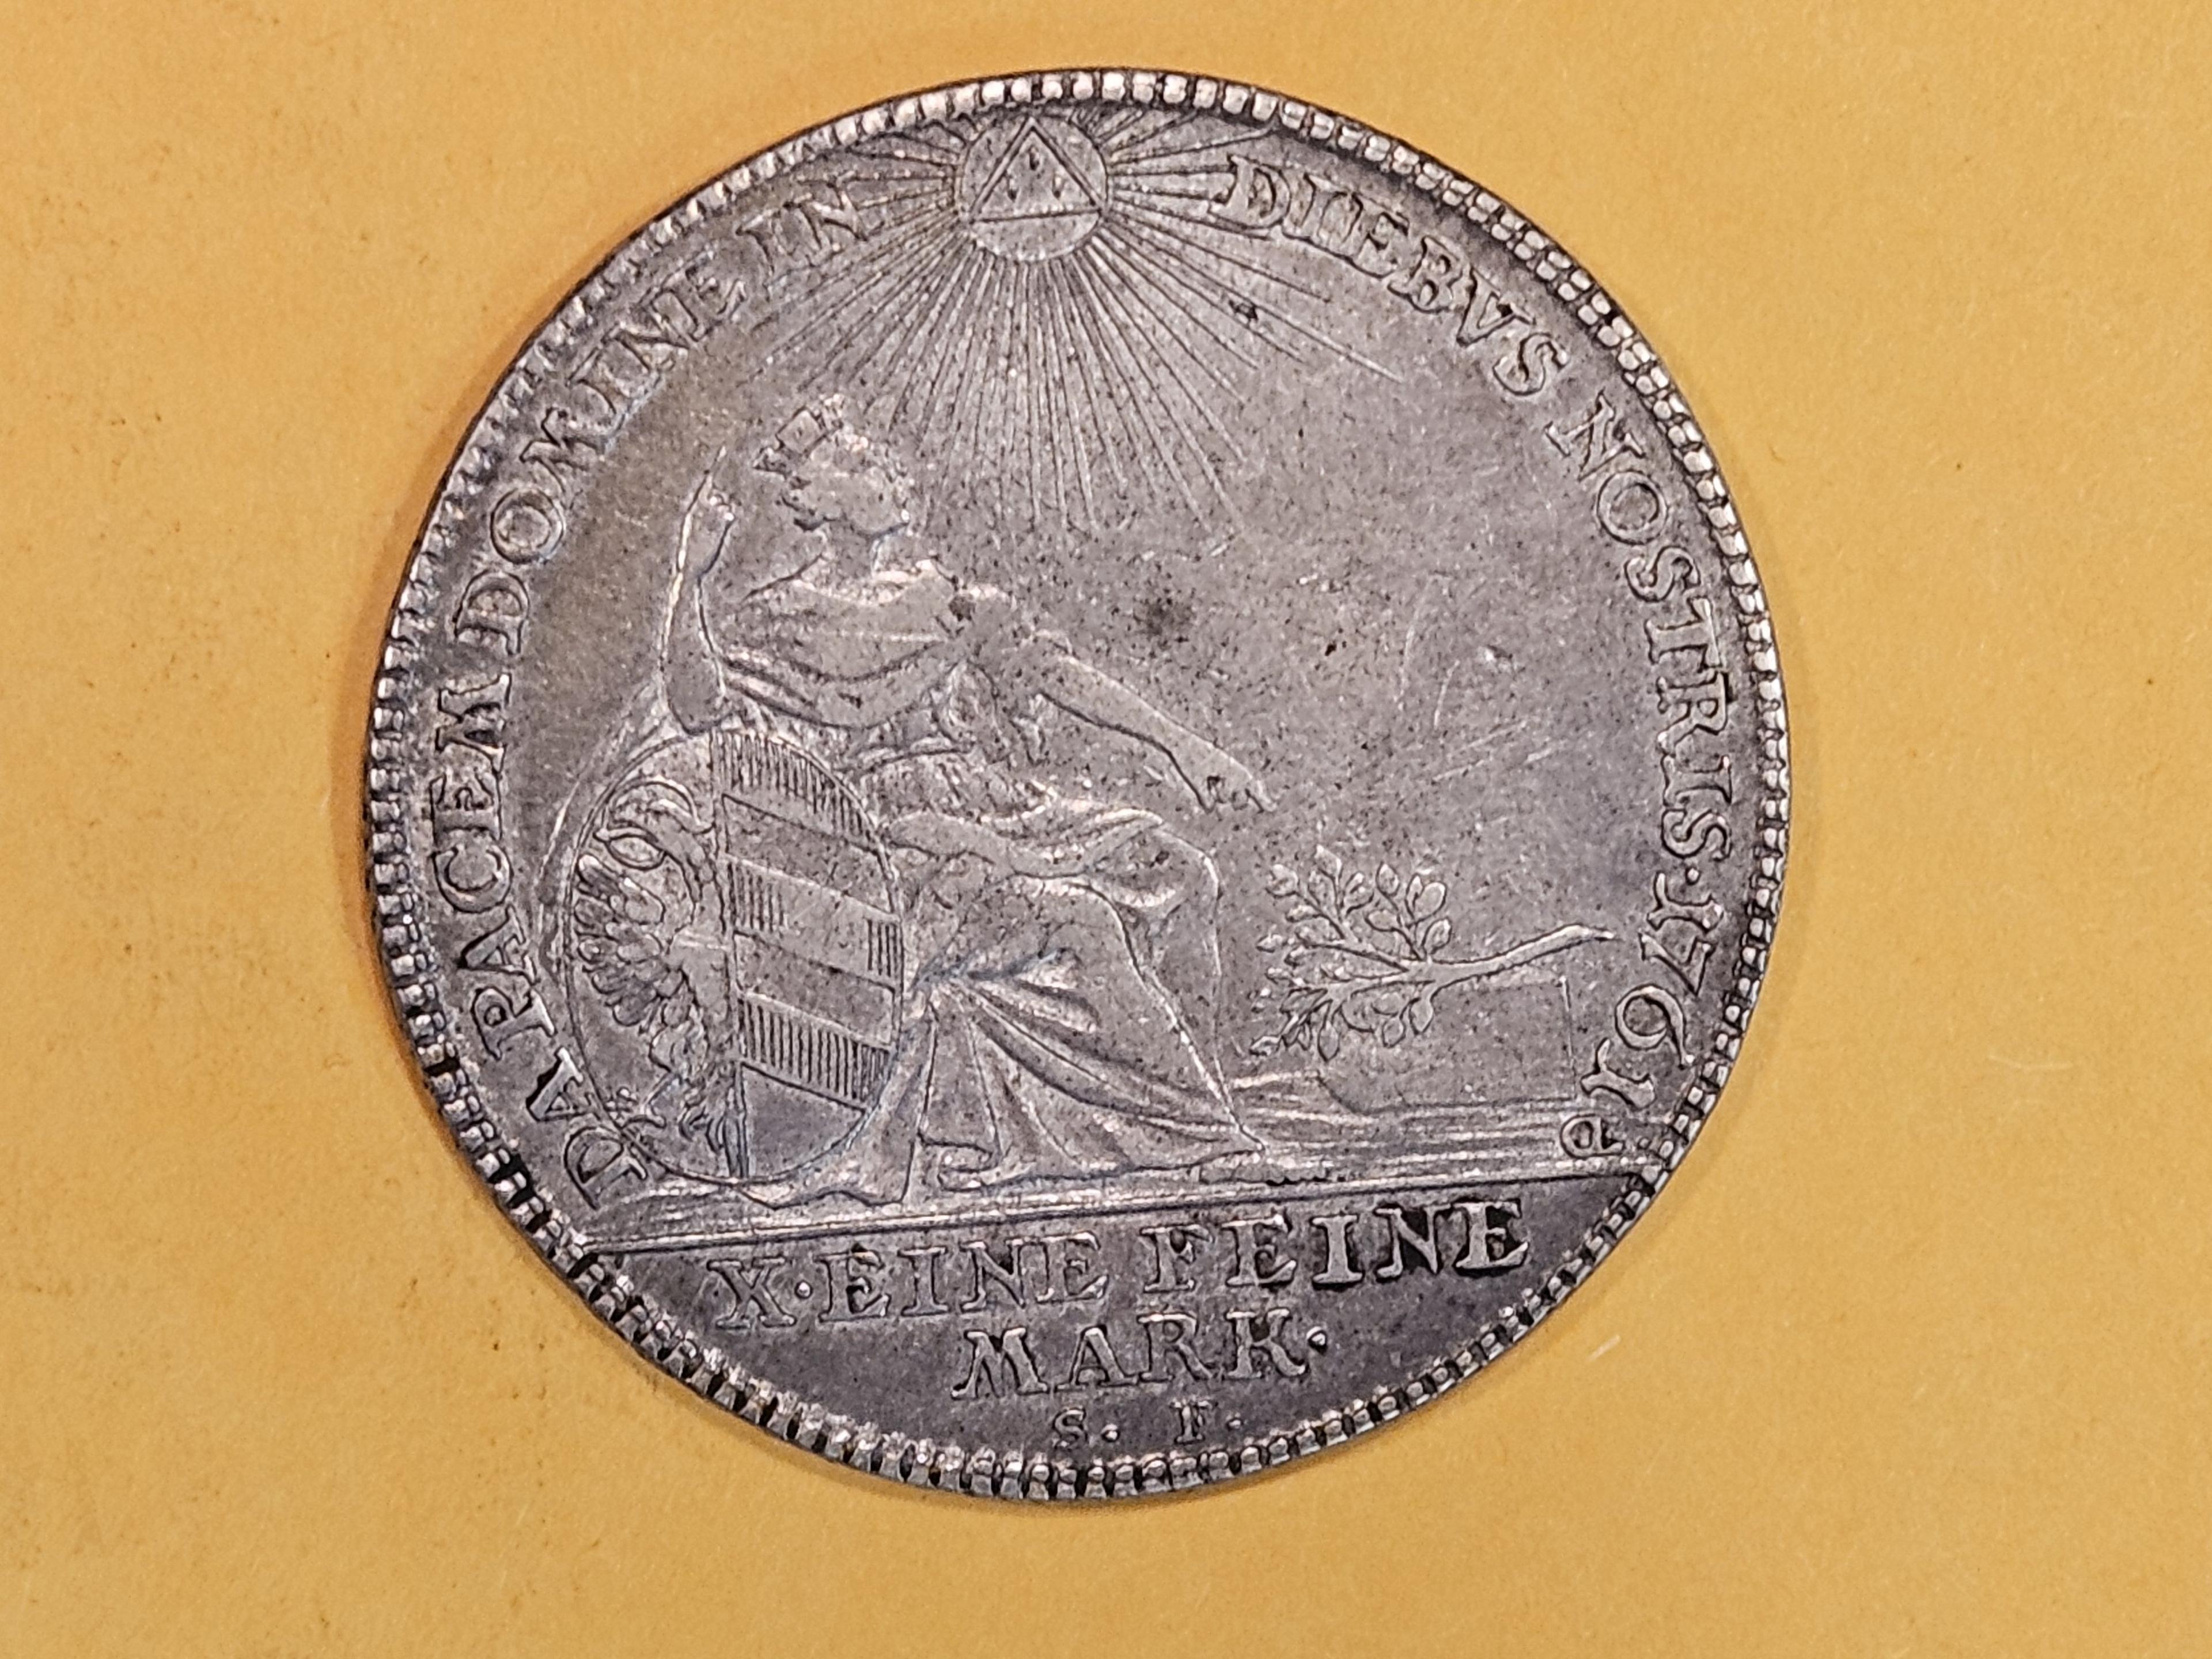 * 1761 German States Nurnberg silver thaler